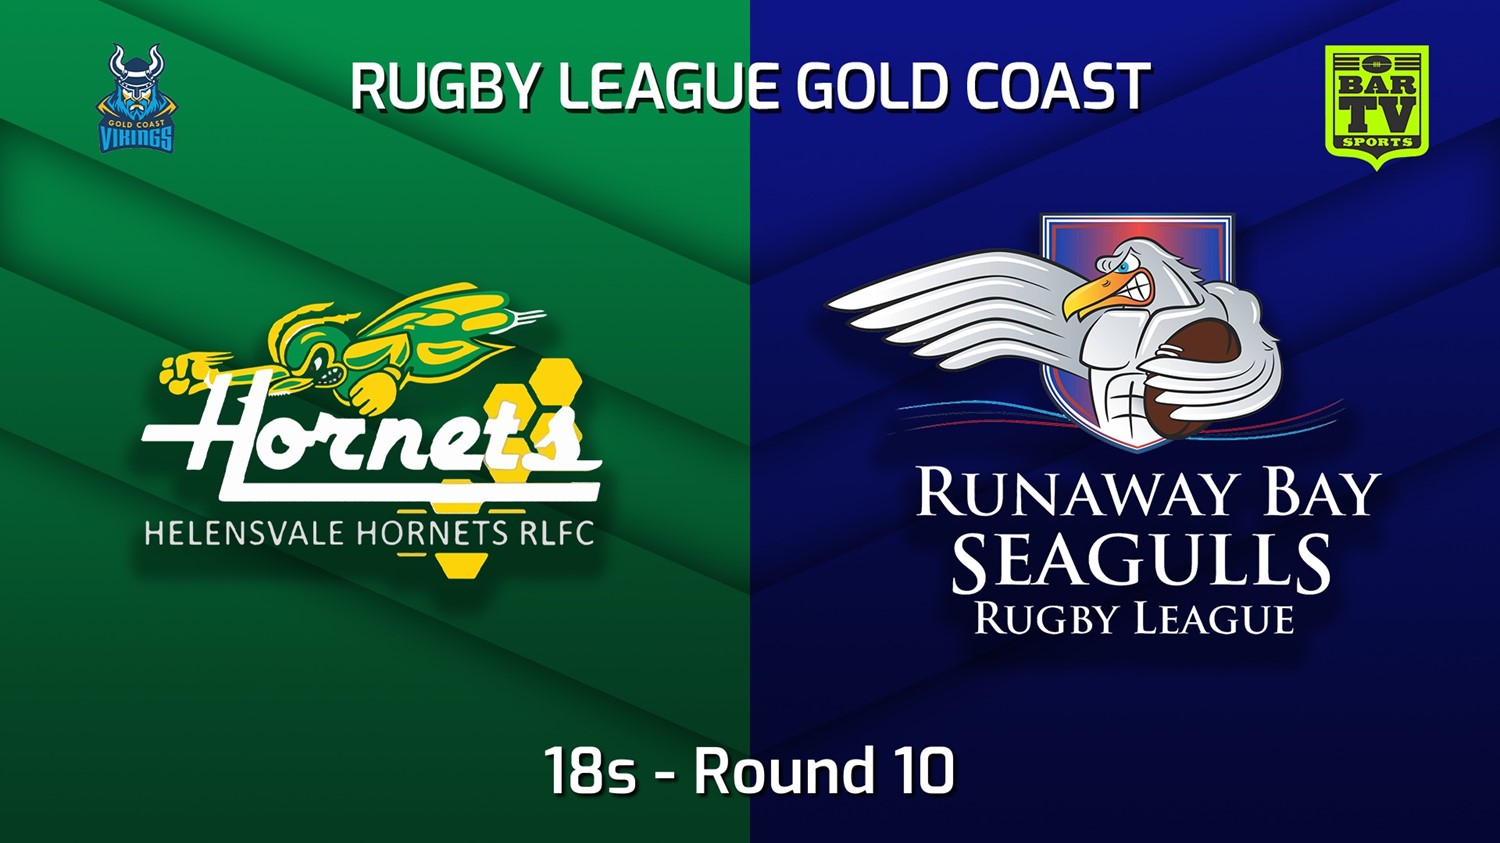 220612-Gold Coast Round 10 - 18s - Helensvale Hornets v Runaway Bay Seagulls Slate Image